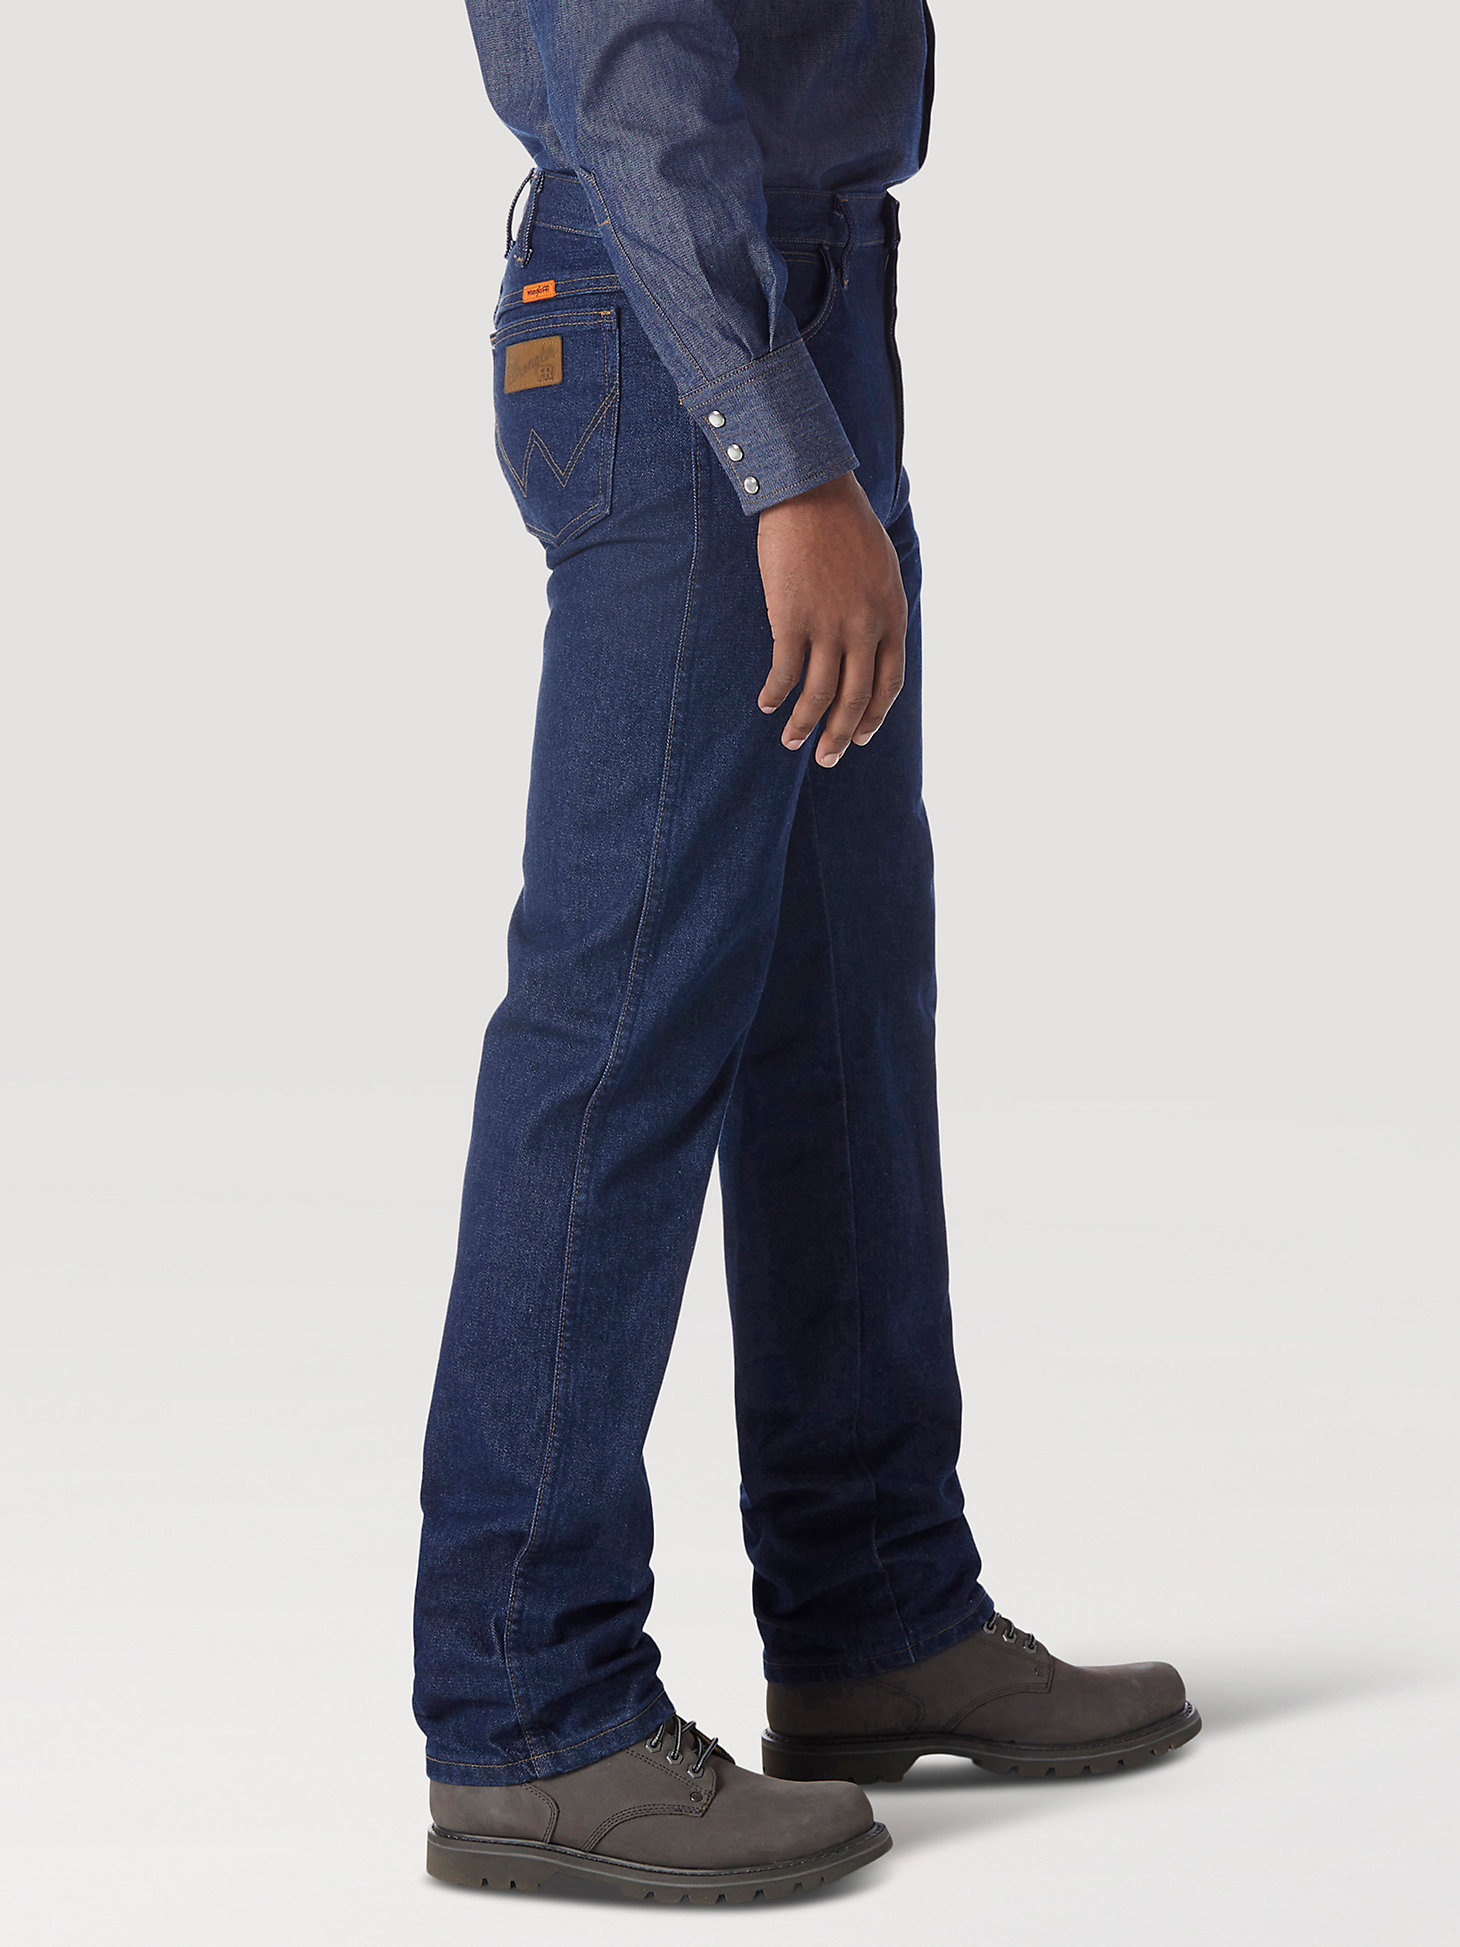 Wrangler® FR Flame Resistant Original Fit Jean in PREWASH alternative view 1